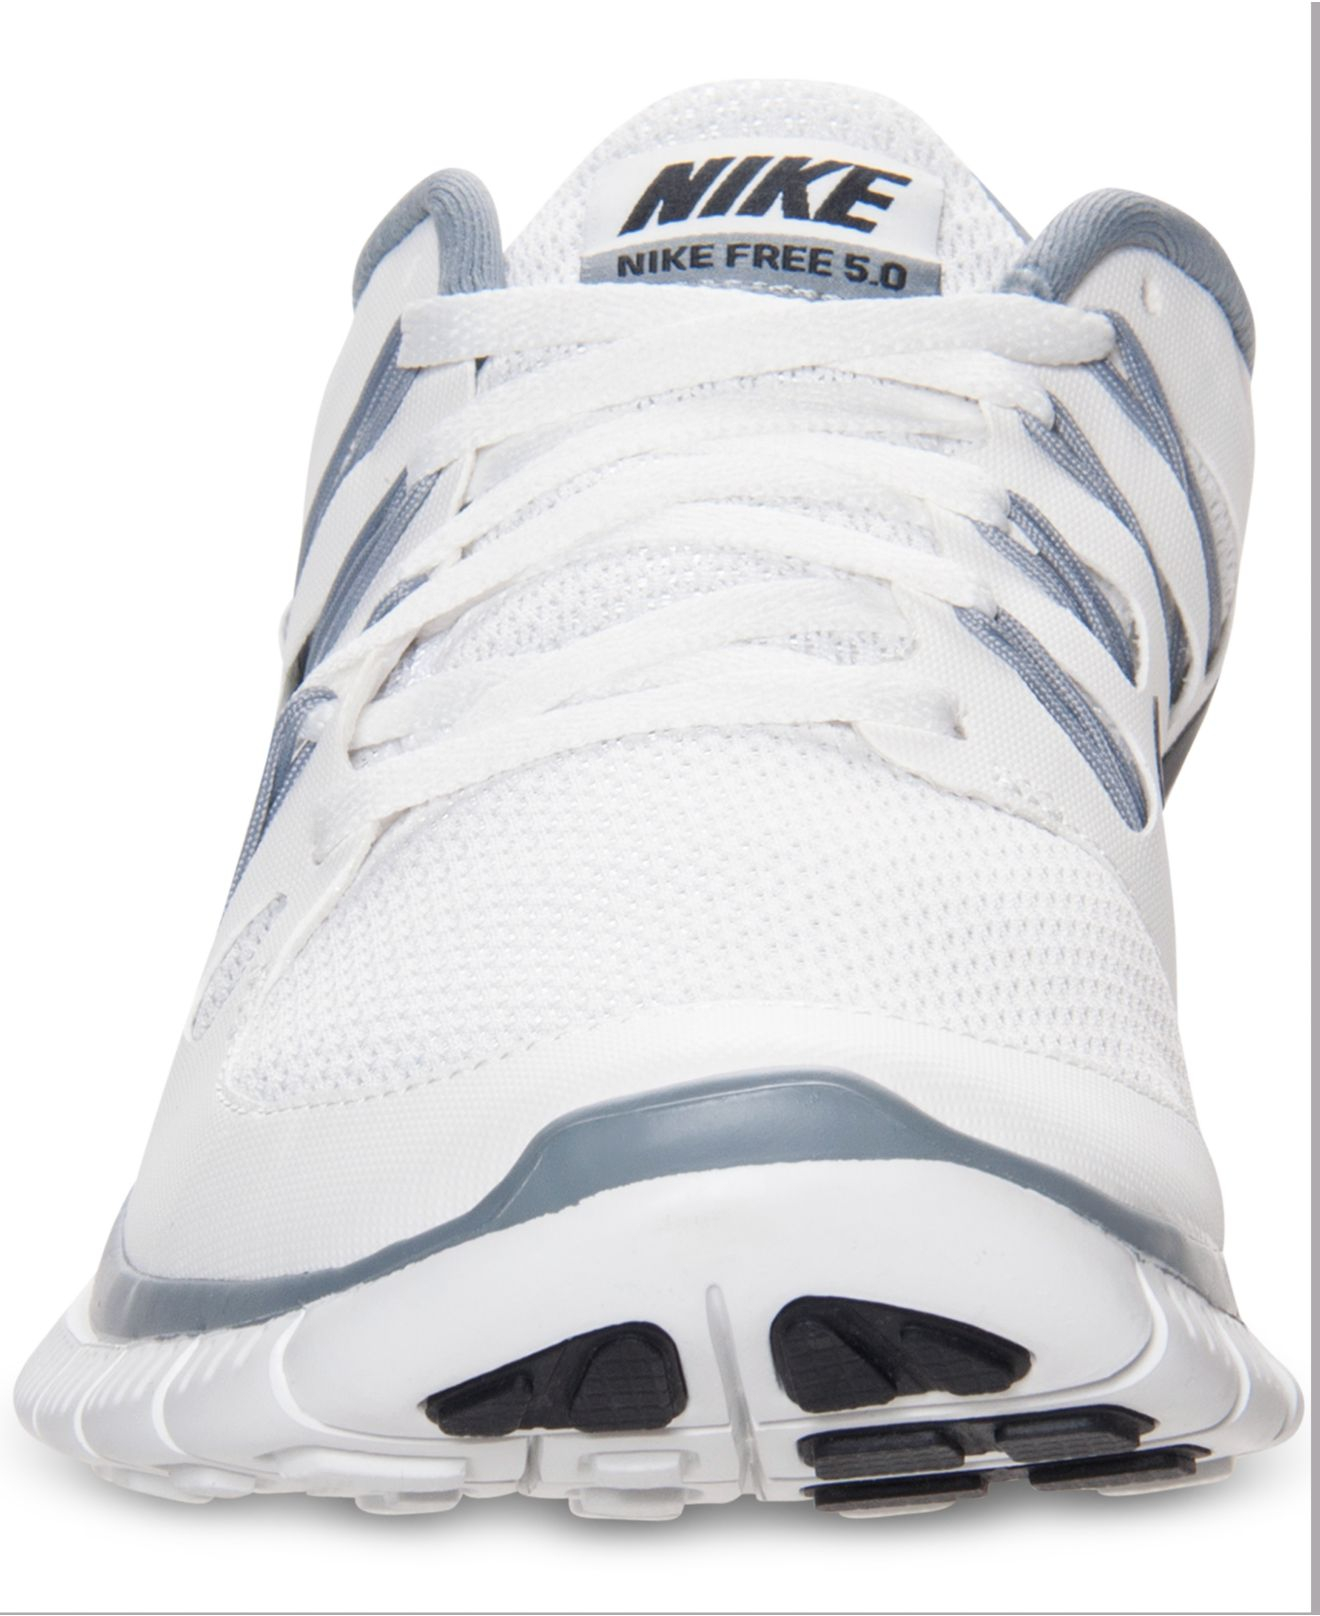 Lyst - Nike Men'S Free 5.0+ Running Sneakers From Finish Line in White for Men